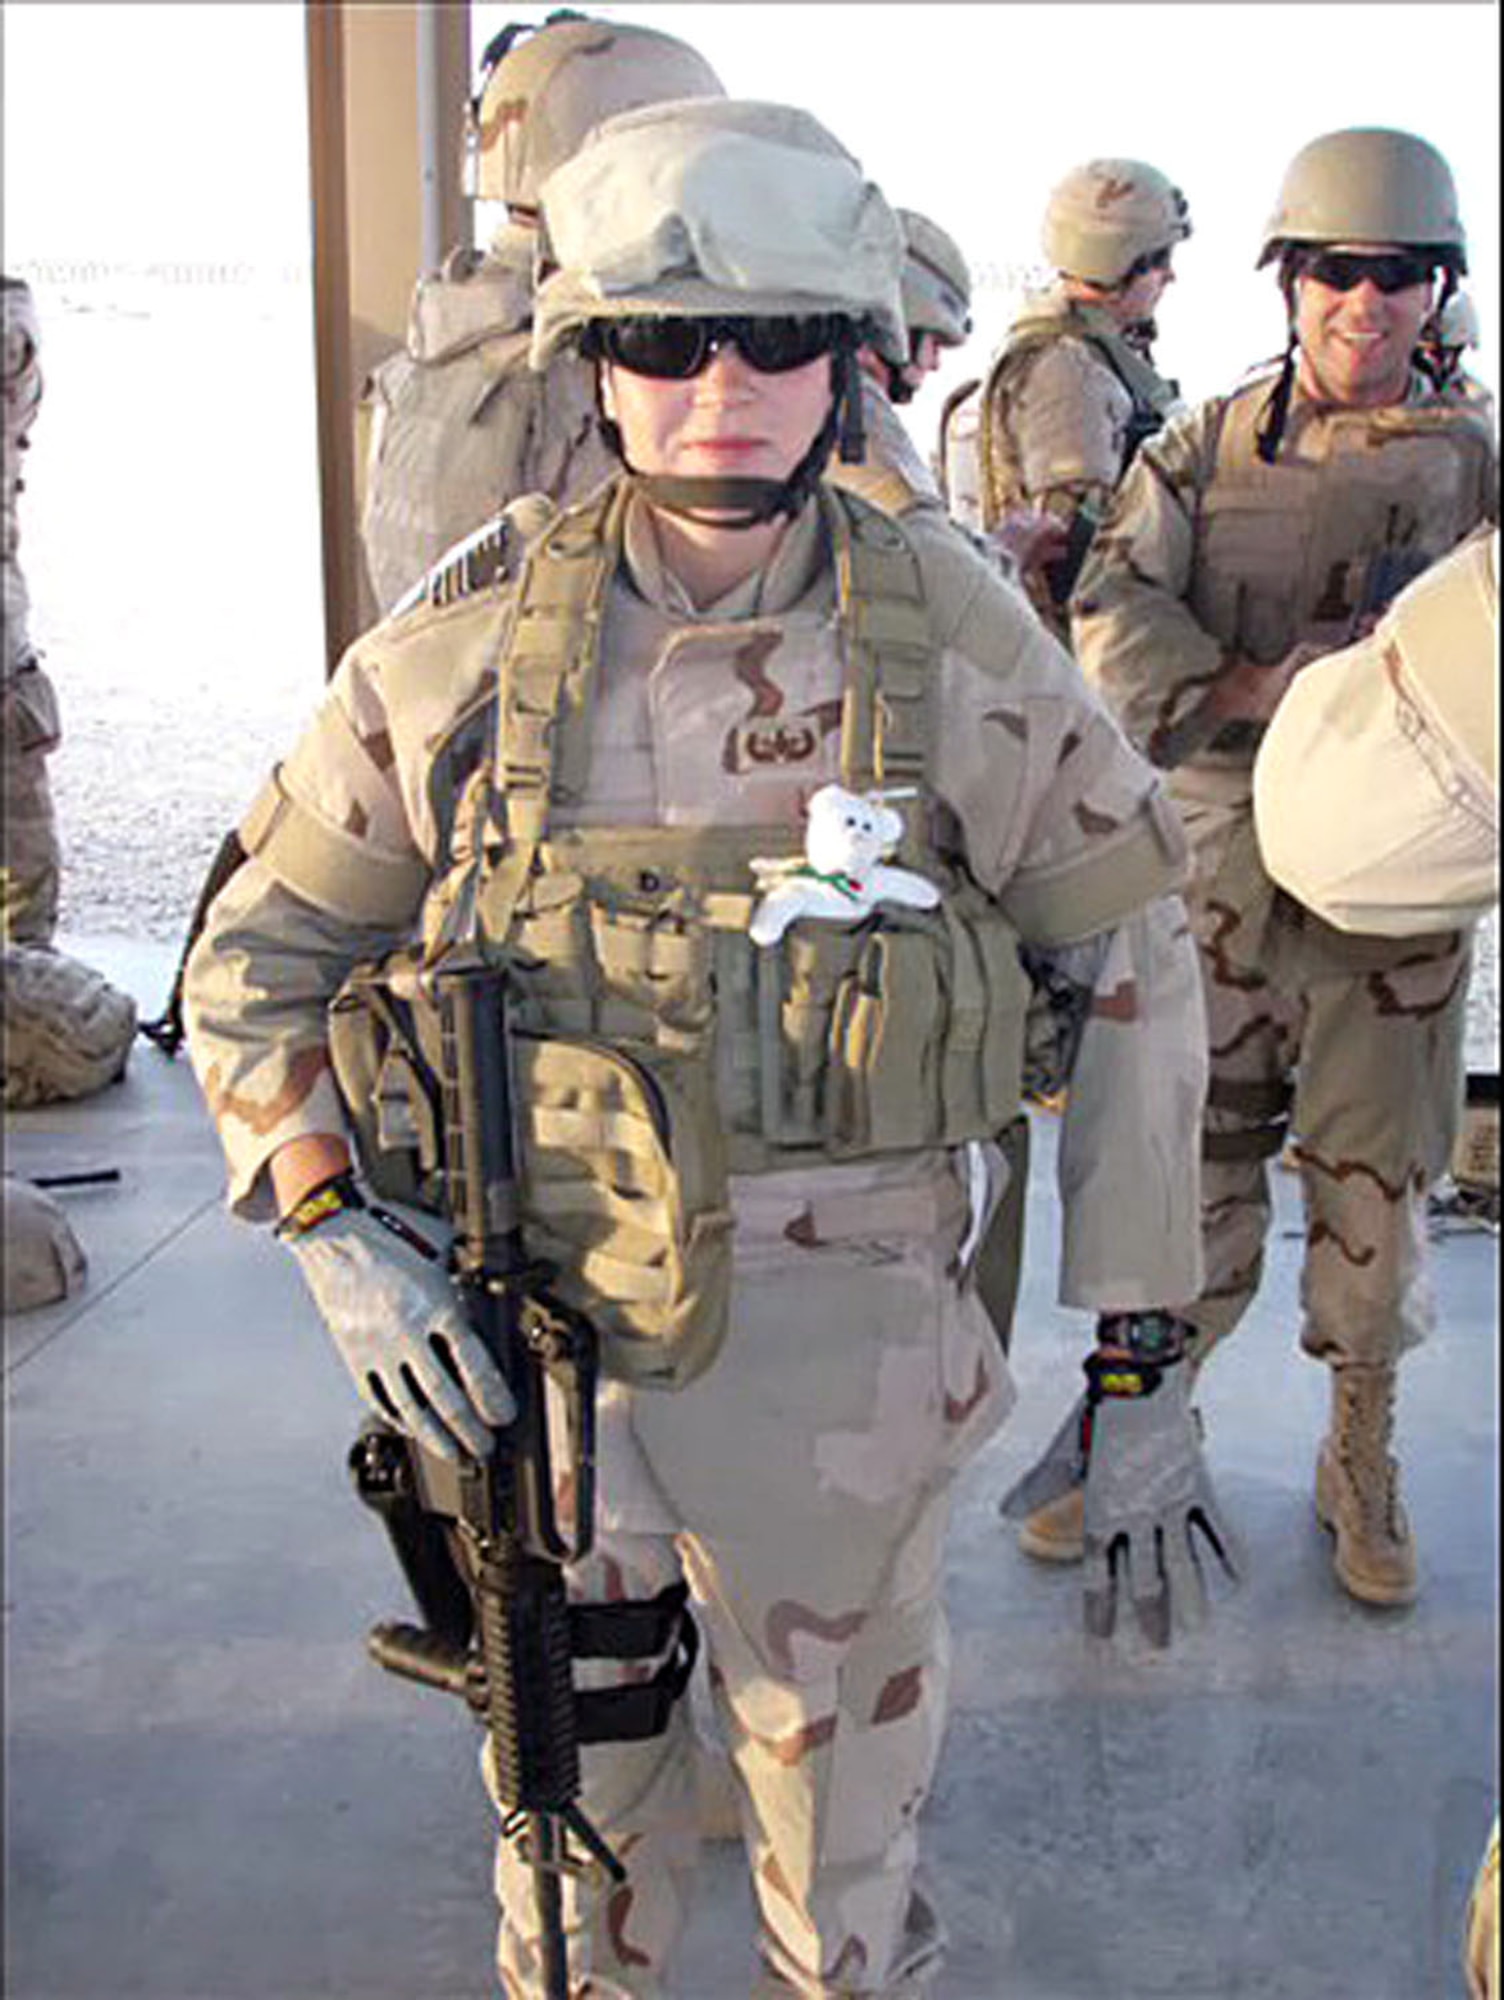 Senior Airmen Elizabeth Loncki in Iraq. She was killed Jan. 7, 2007, as her explosive ordnance disposal team tried to dismantle a car bomb planted near Baghdad, Iraq. (U.S. Air Force photo)